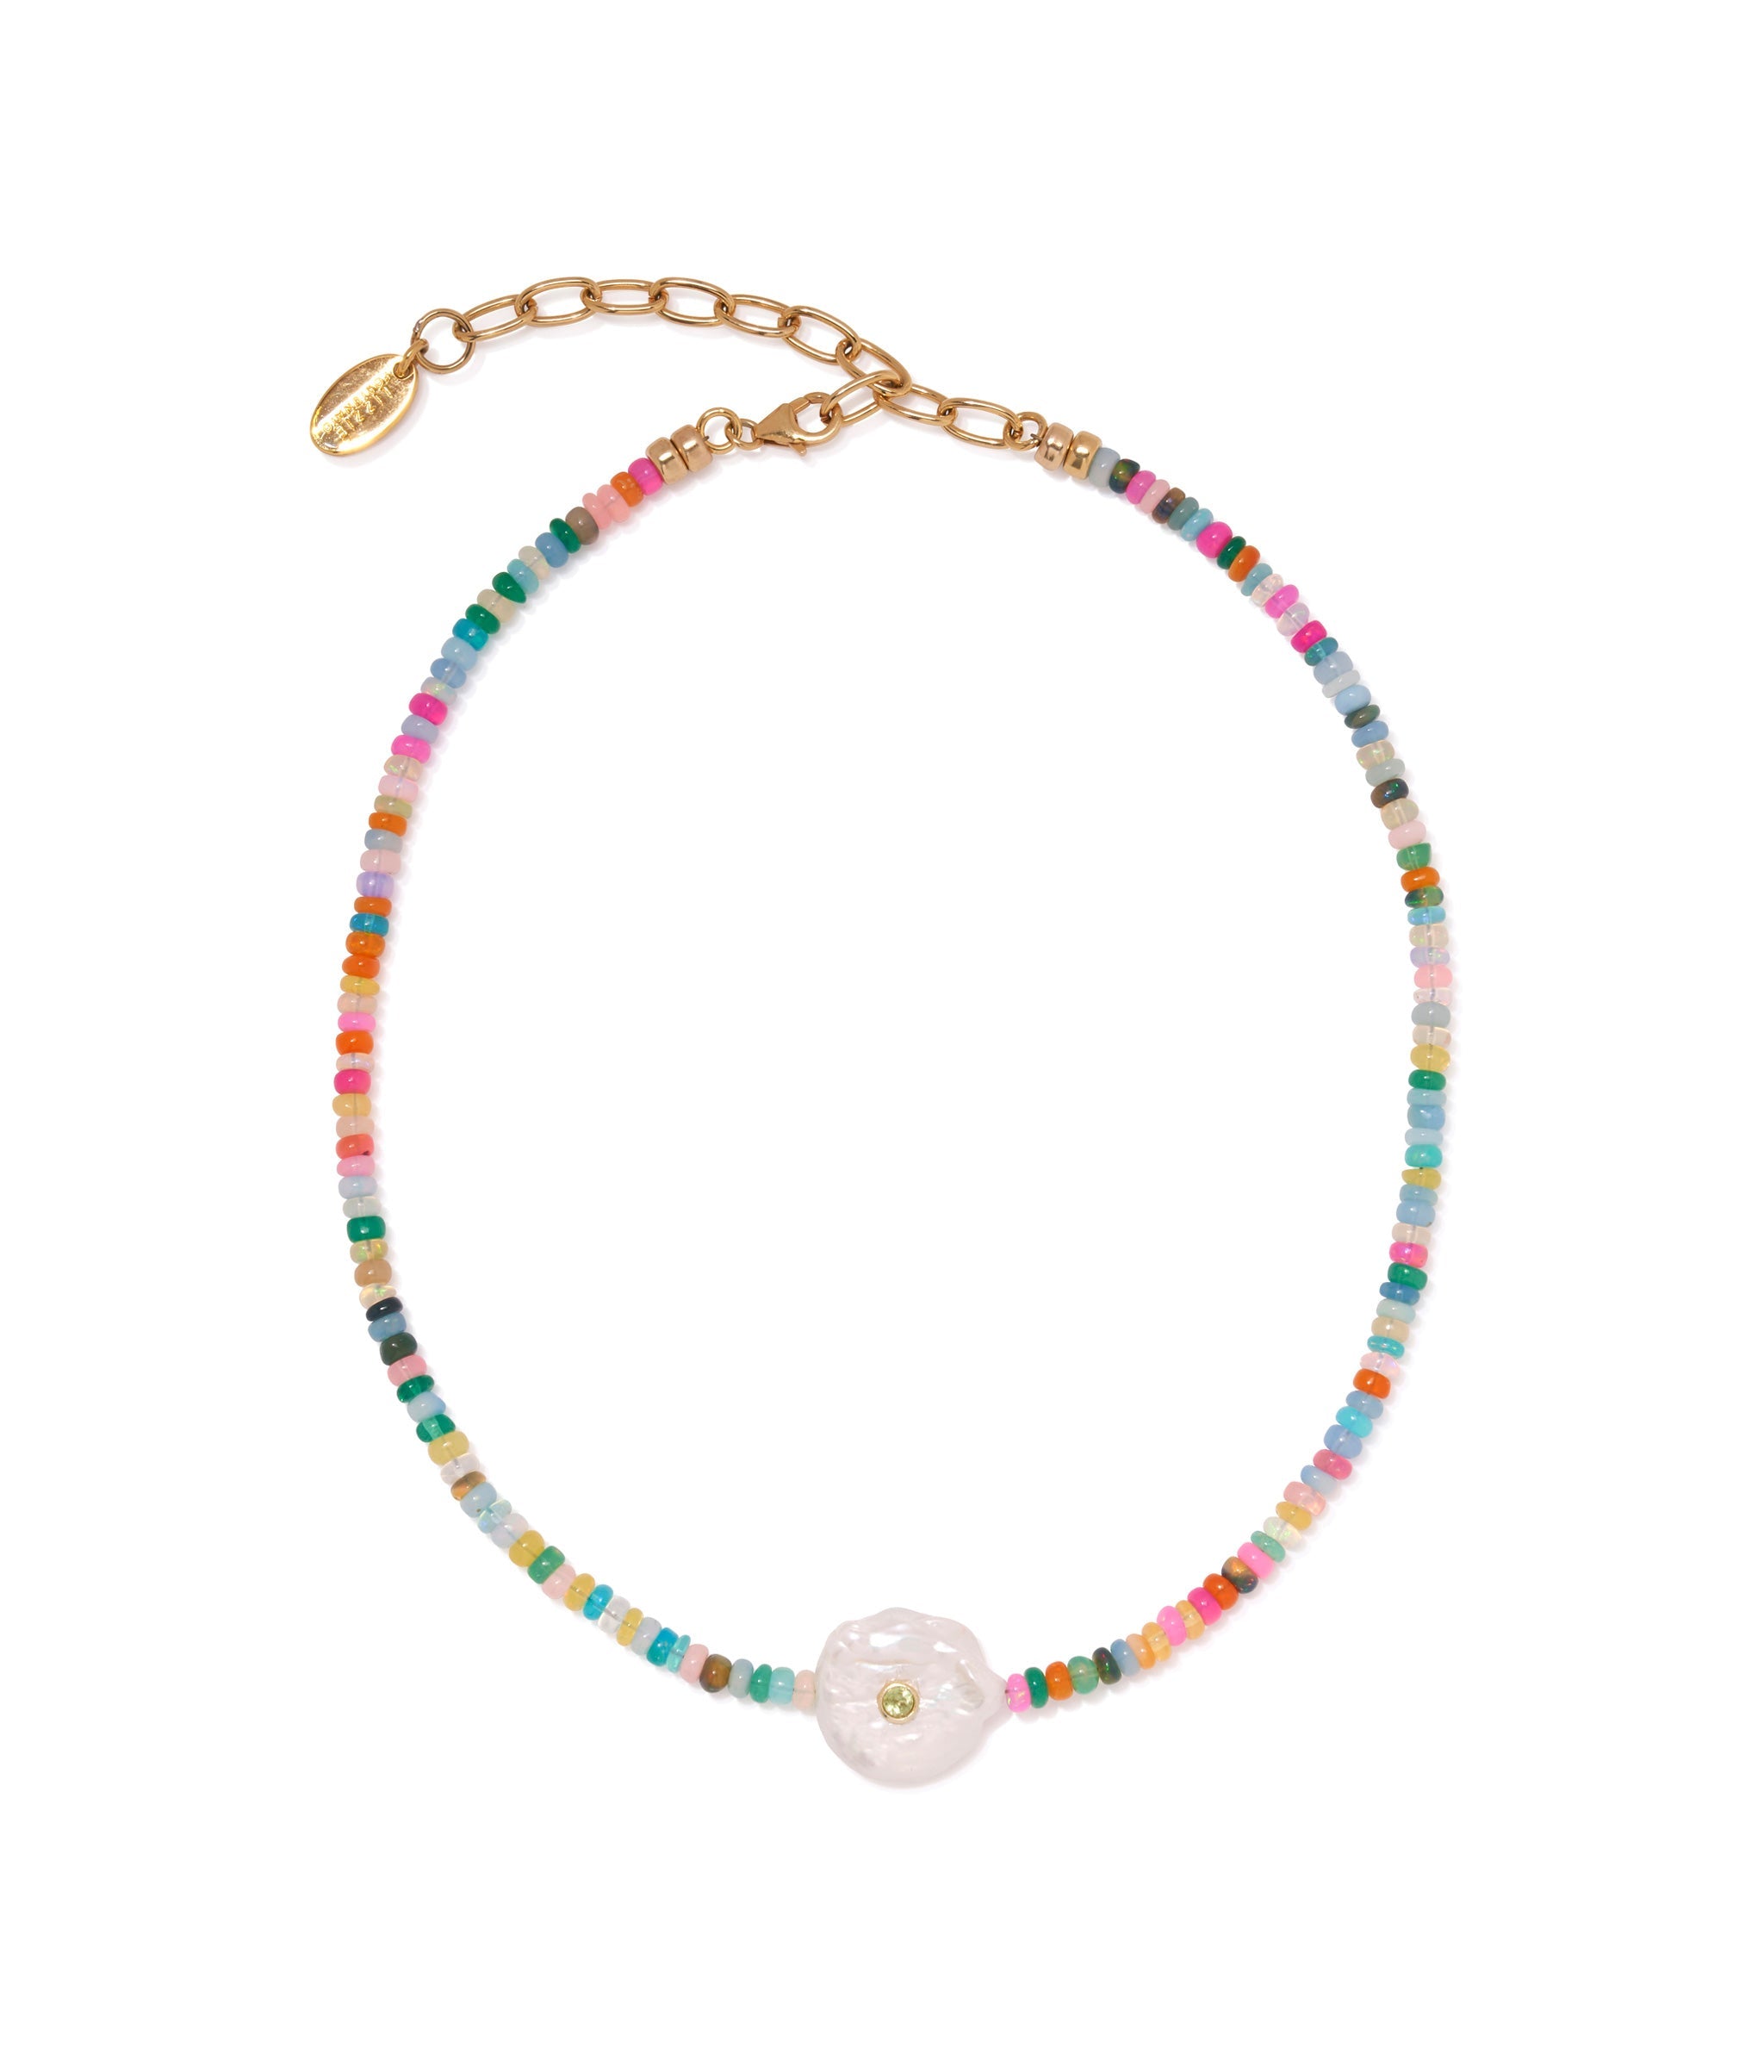 Destination Necklace in Rainbow Opal